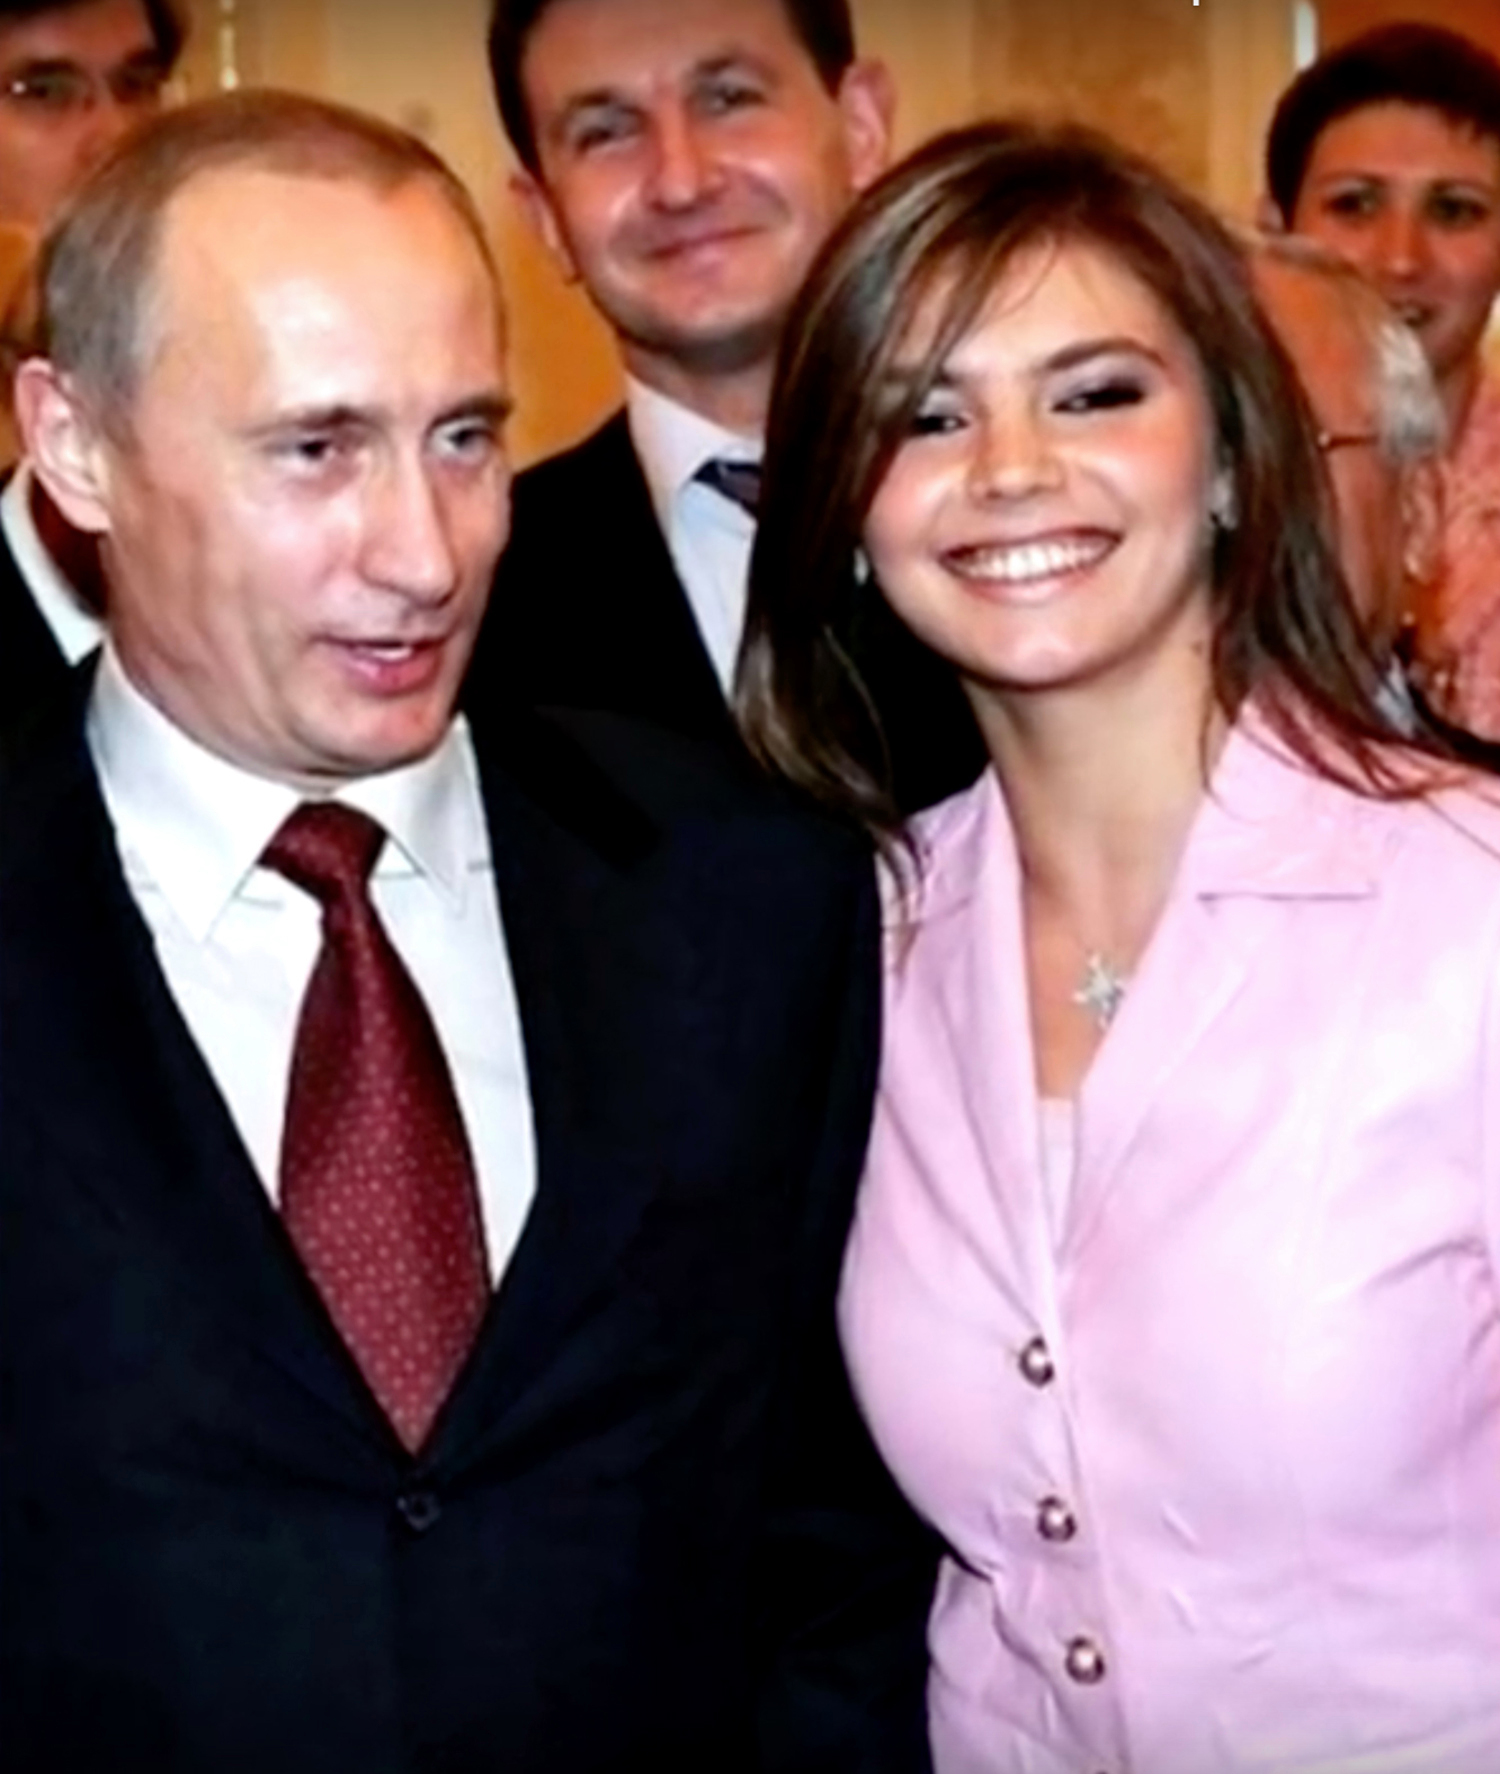  Vladimir Poutine et Alina Kabaeva @ East2west News